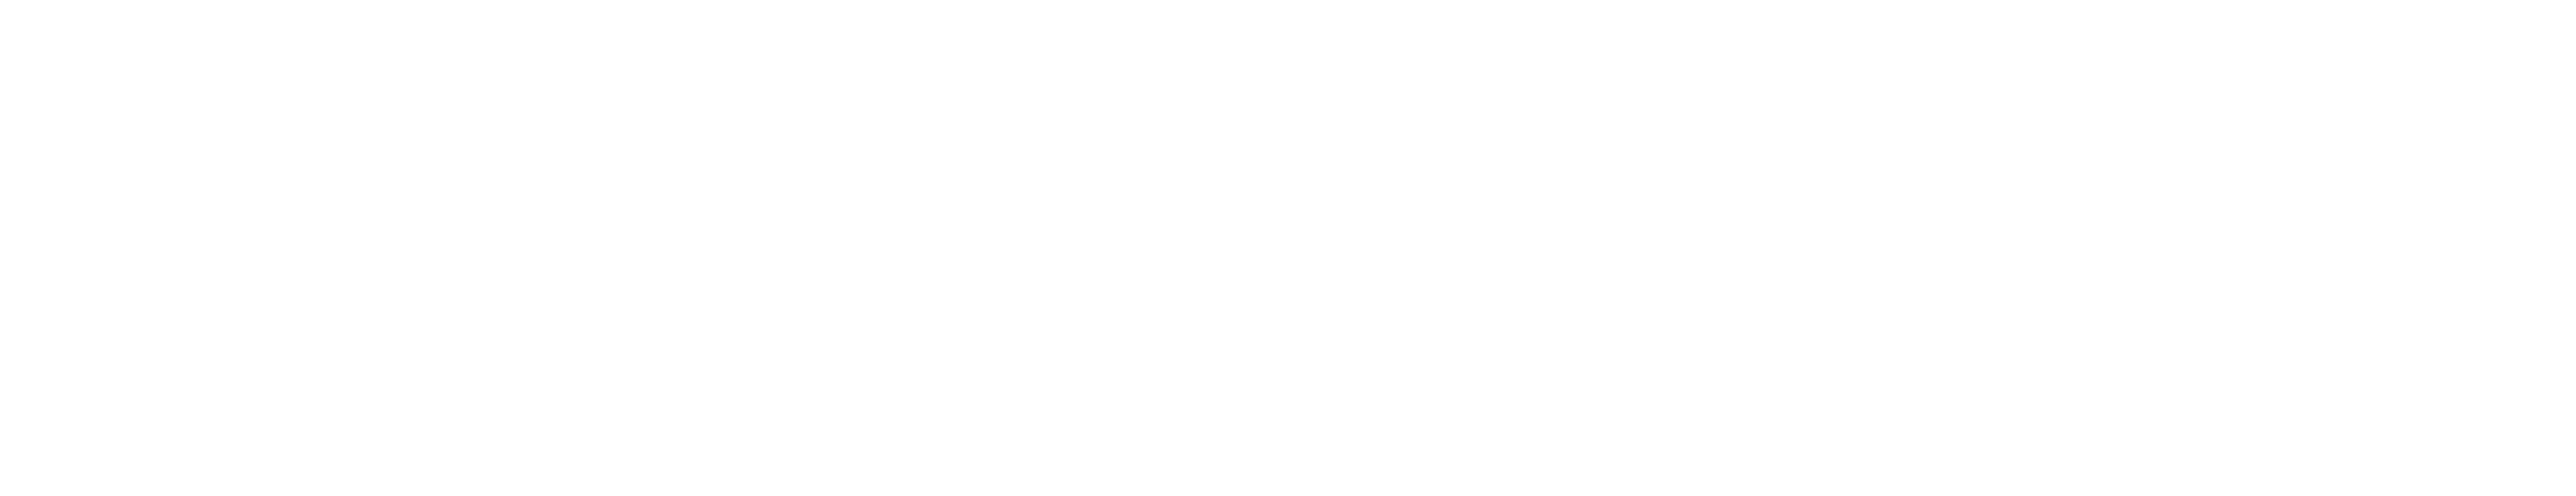 GM GM Hotel Grand Moments logo